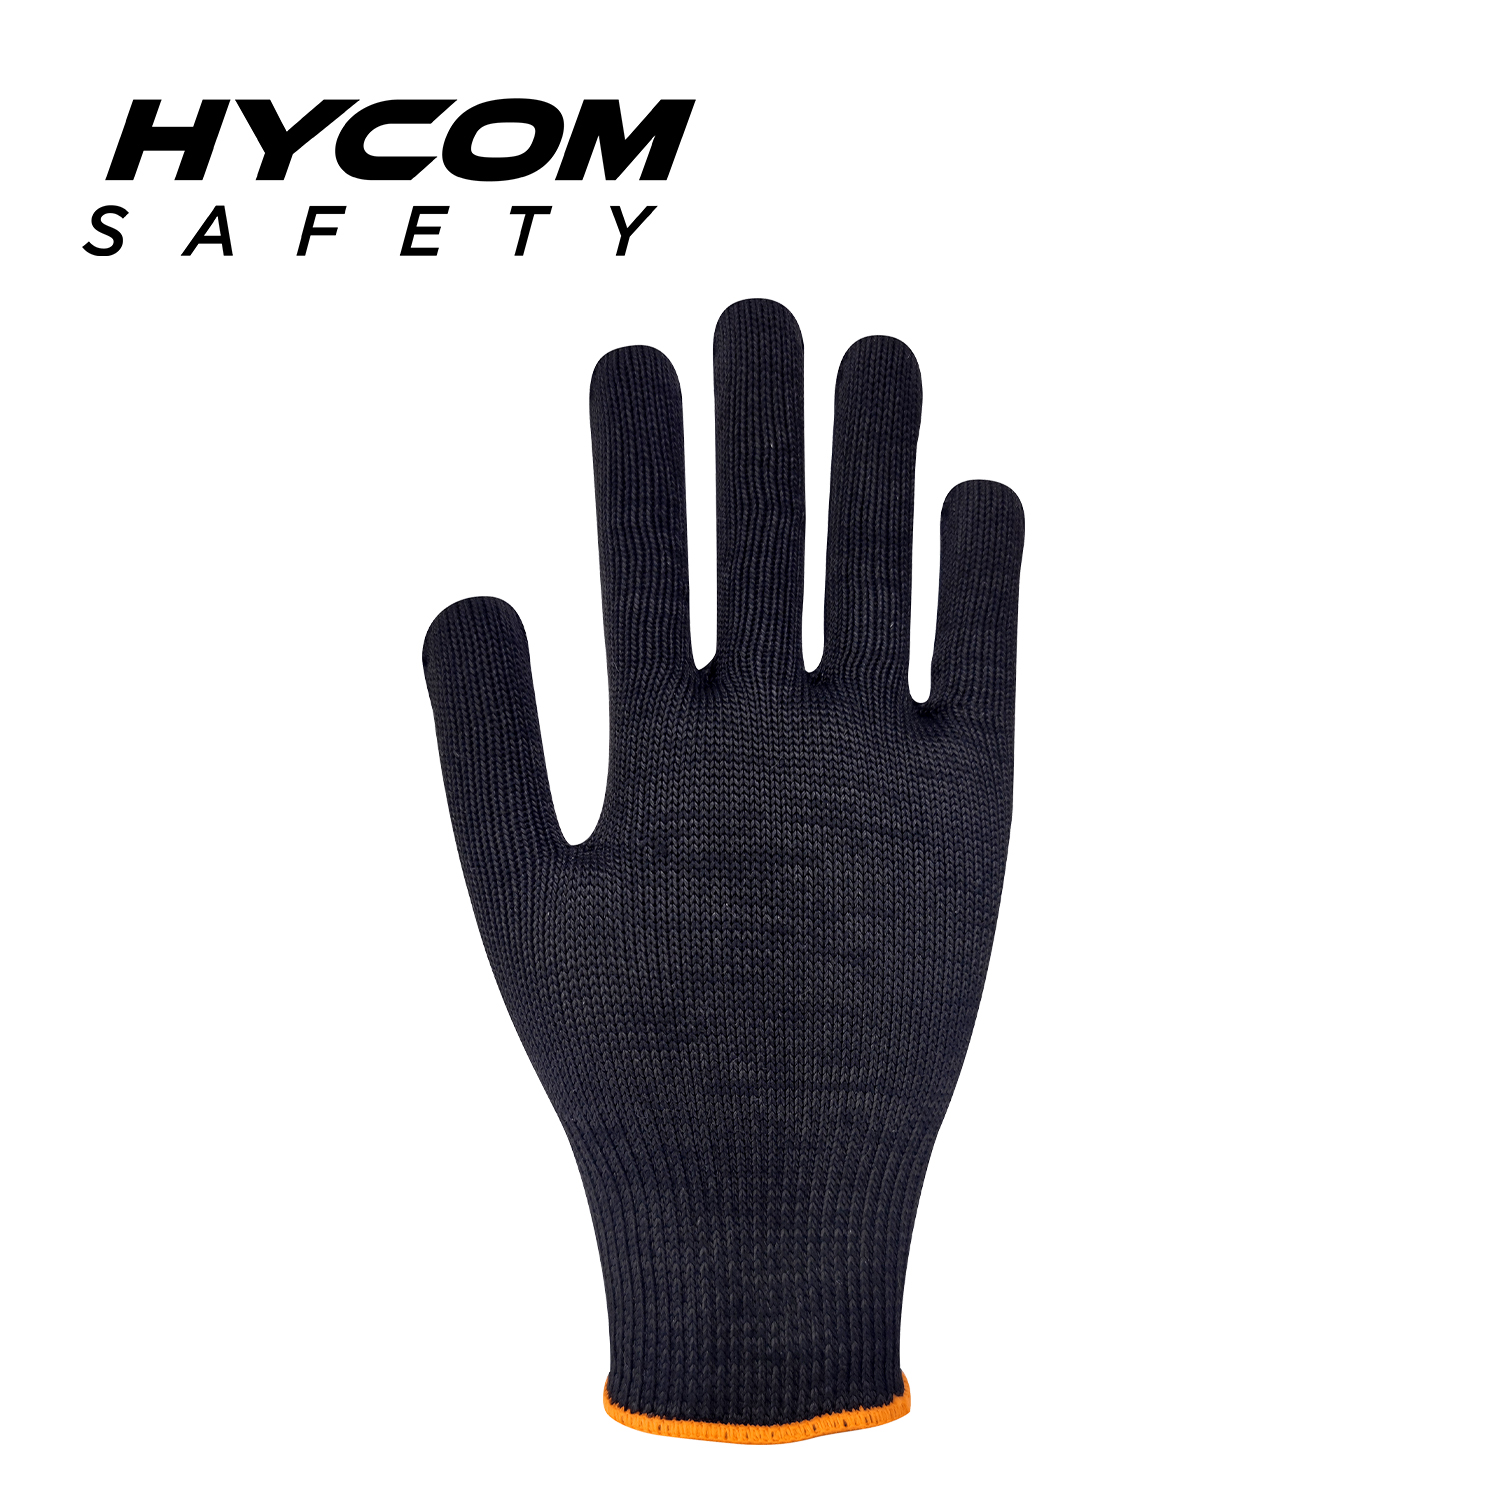 HYCOM 10G ANSI 6 Schnittfester Handschuh, der direkt mit Lebensmitteln in Berührung kommt, HPPE-Handschuhe, FDA-Küchenhandschuhe